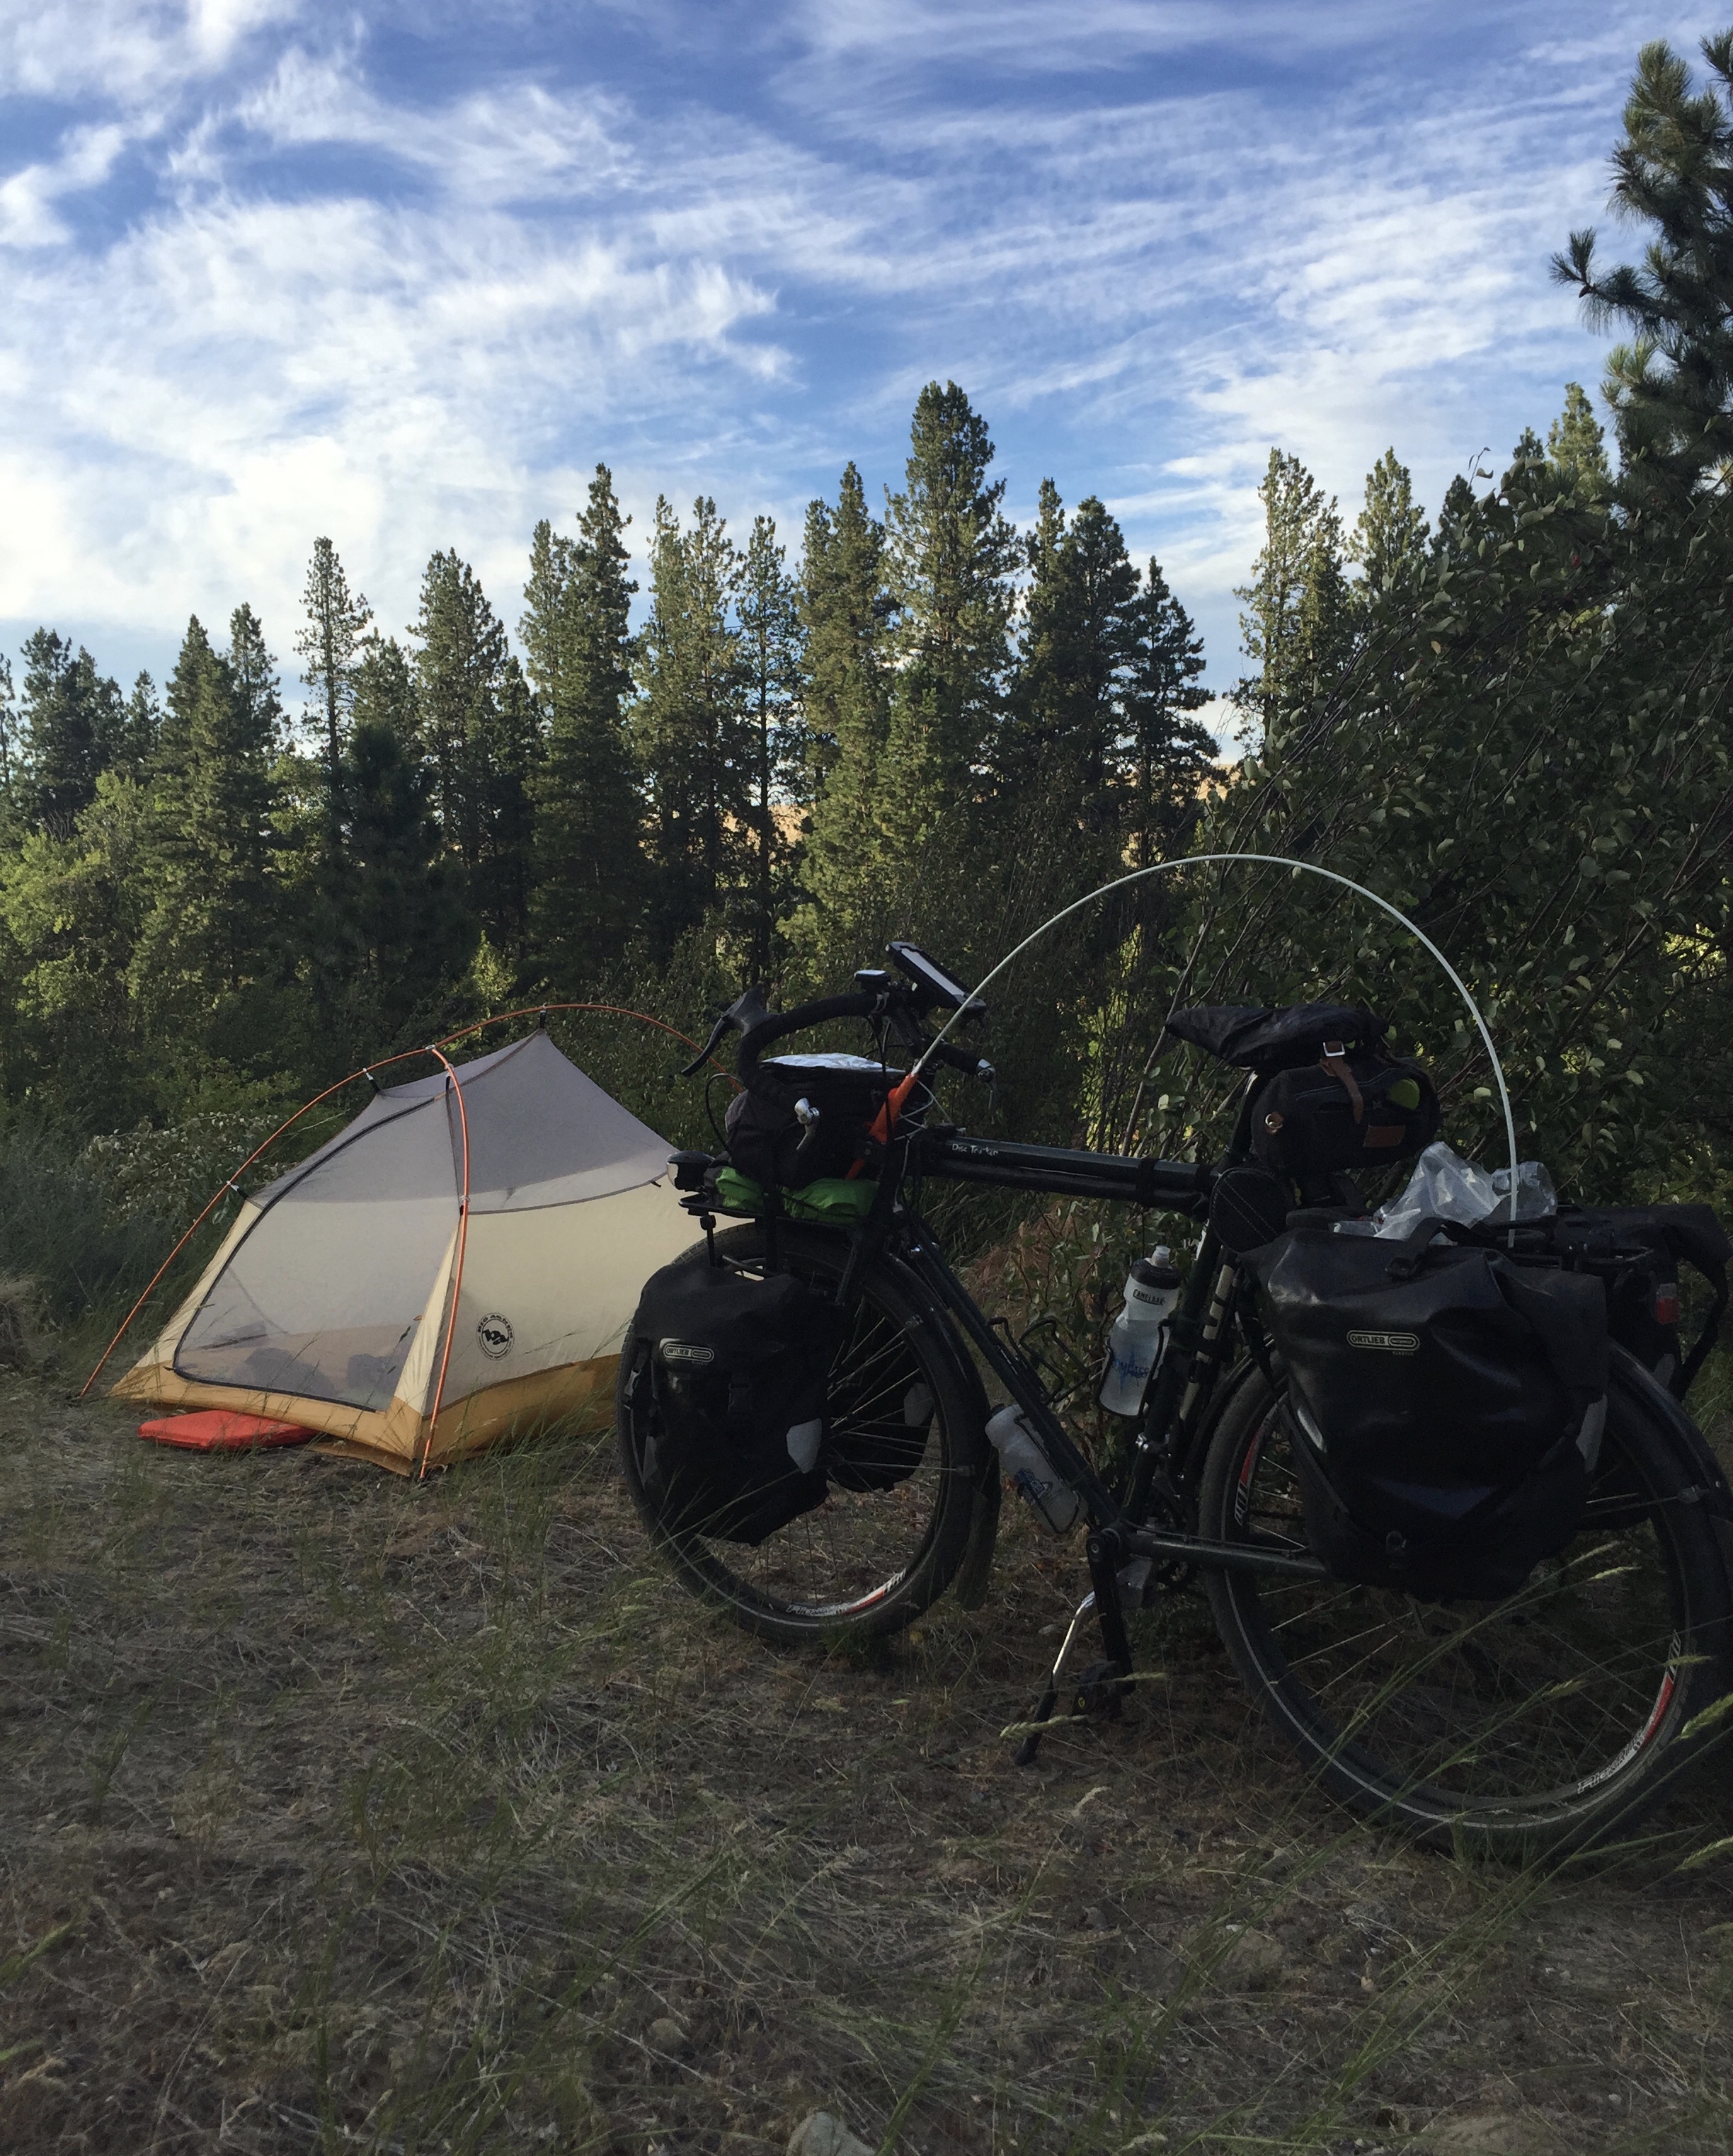 Camping along the John Wayne Trail